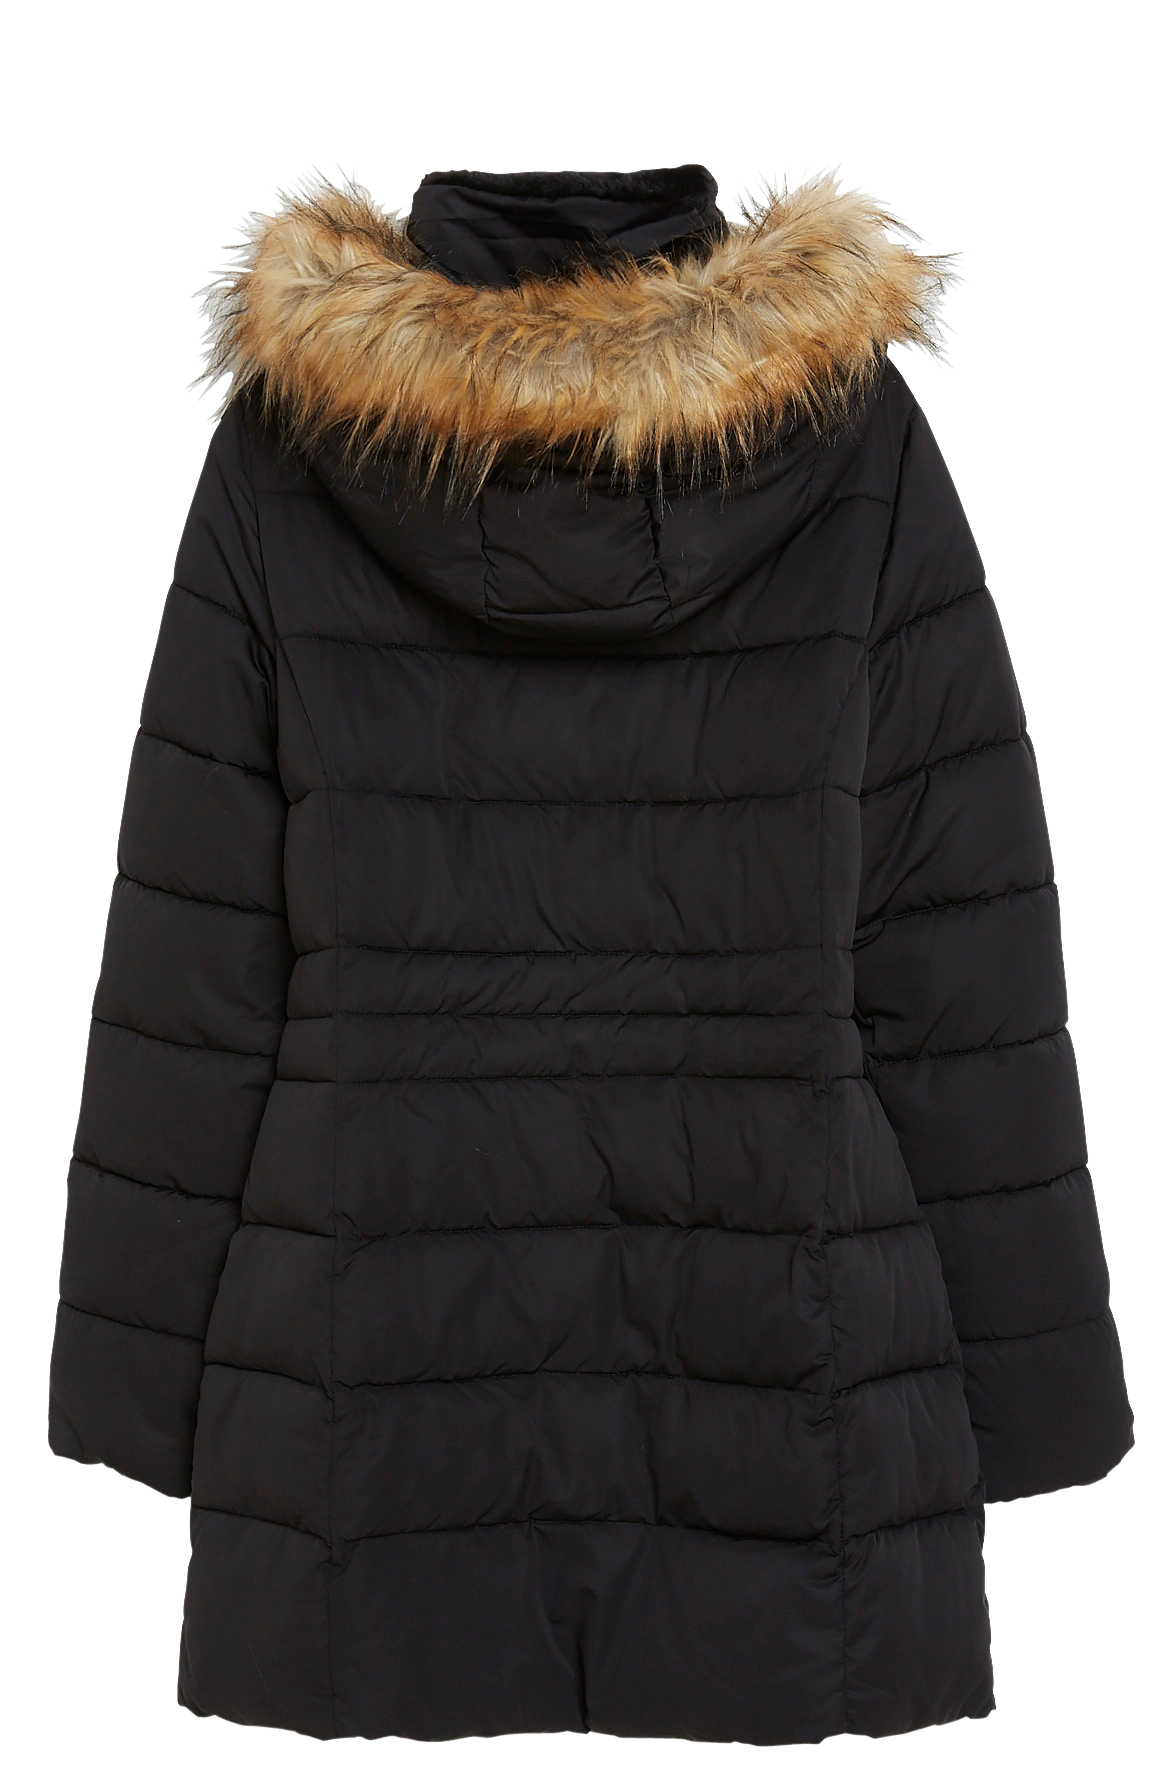 Lindex Coat Amira Down - 89.99 €. Buy Padded Coats from Lindex